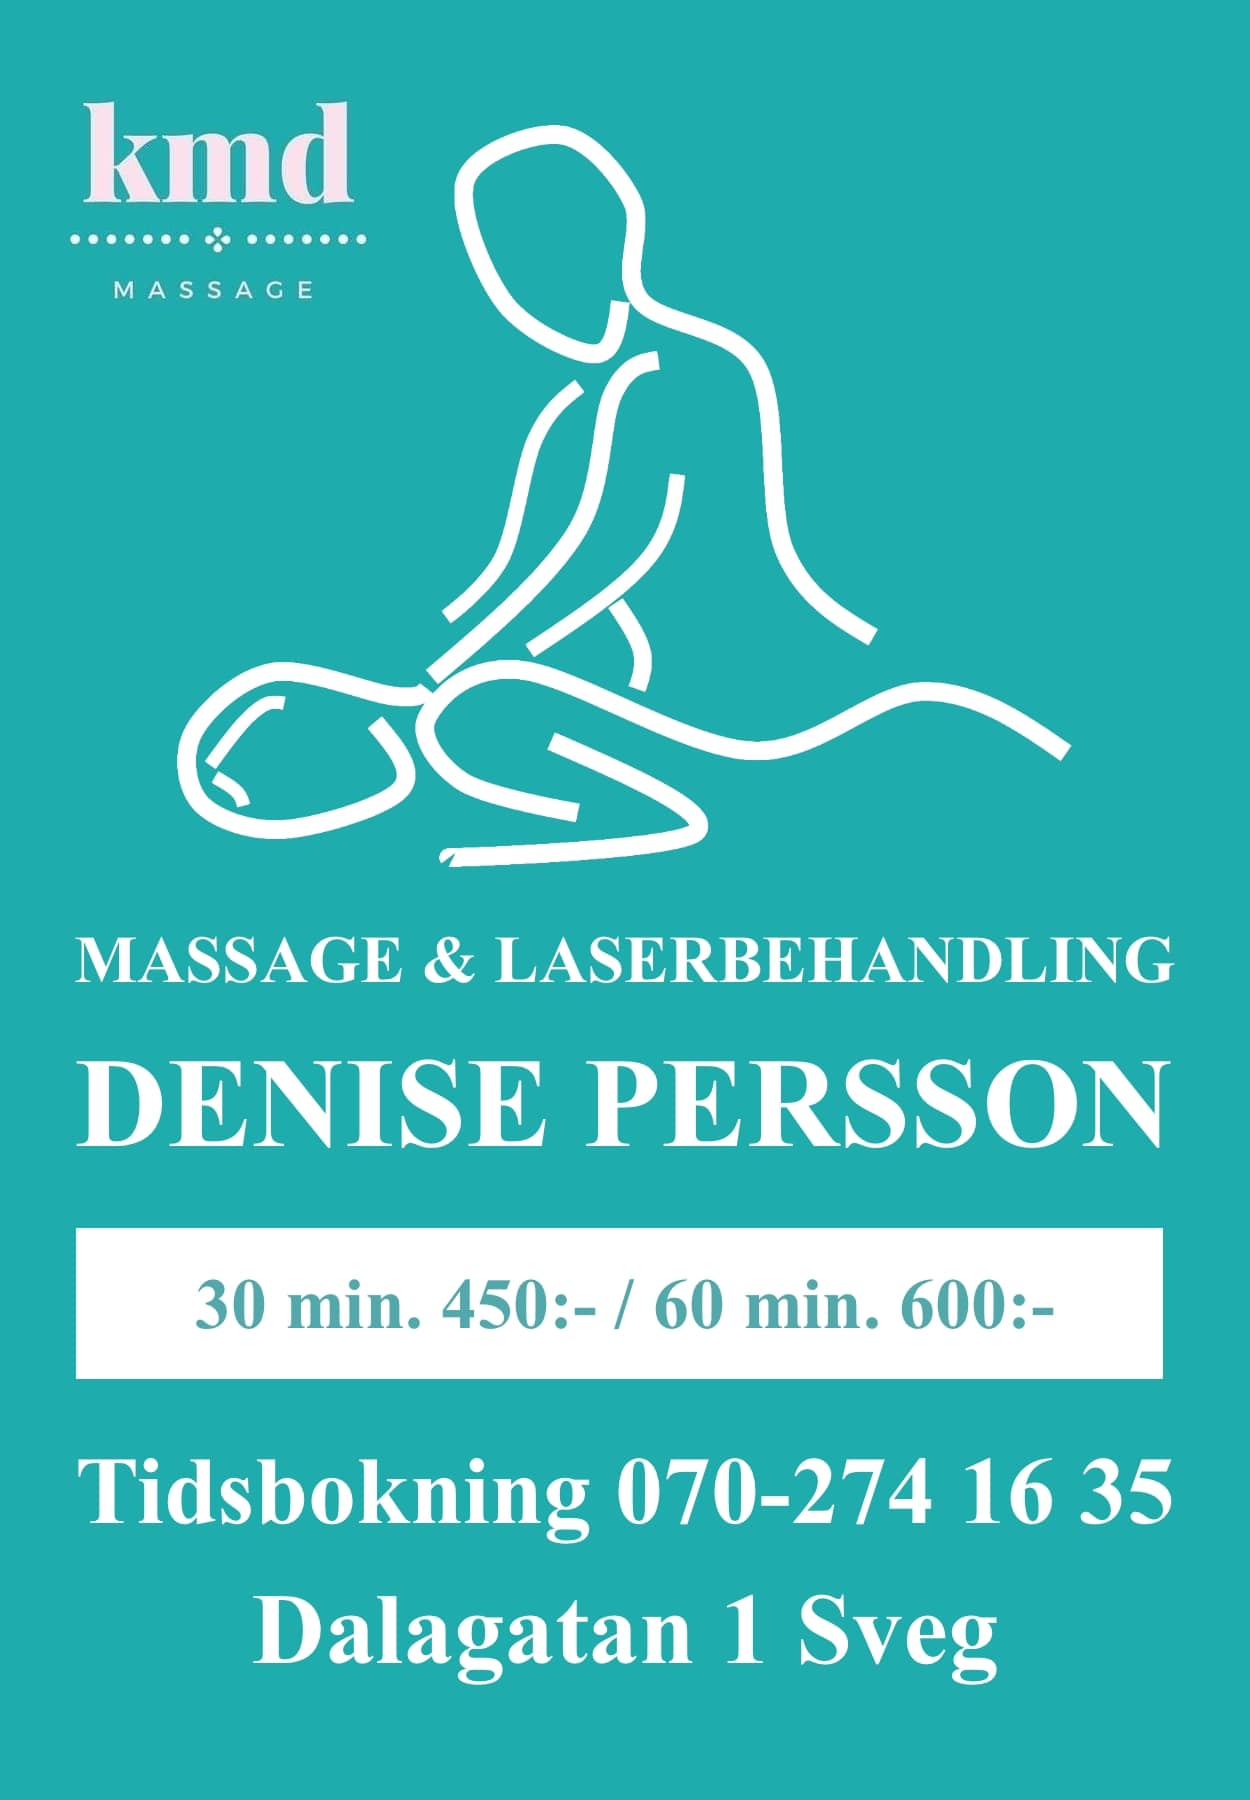 KMD Massage Denise Persson Sveg